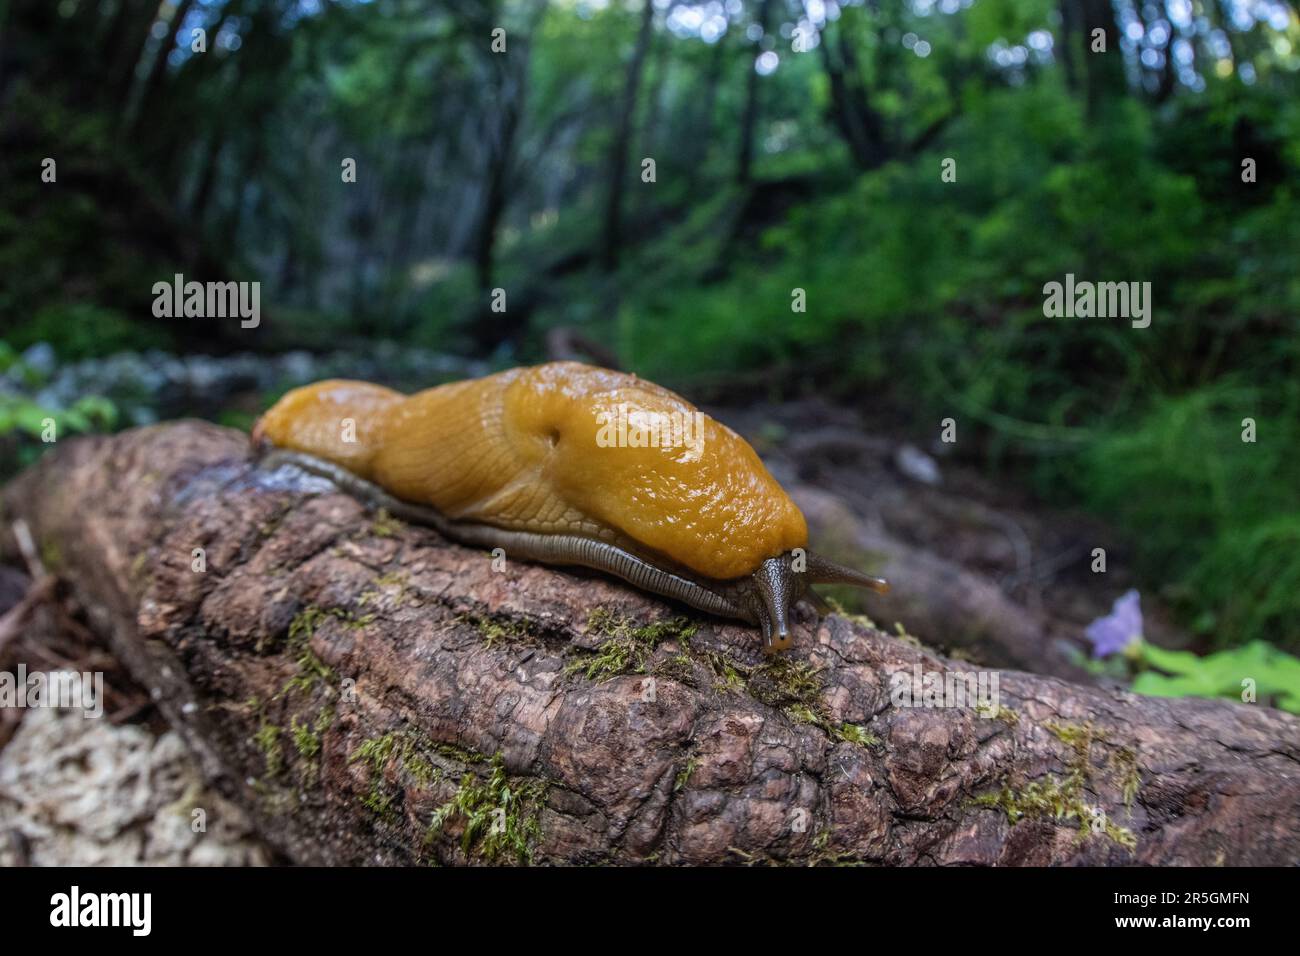 California Banana Slug, Ariolimax californicus, a large yellow mollusk from the forest of Santa Cruz in California, USA. Stock Photo